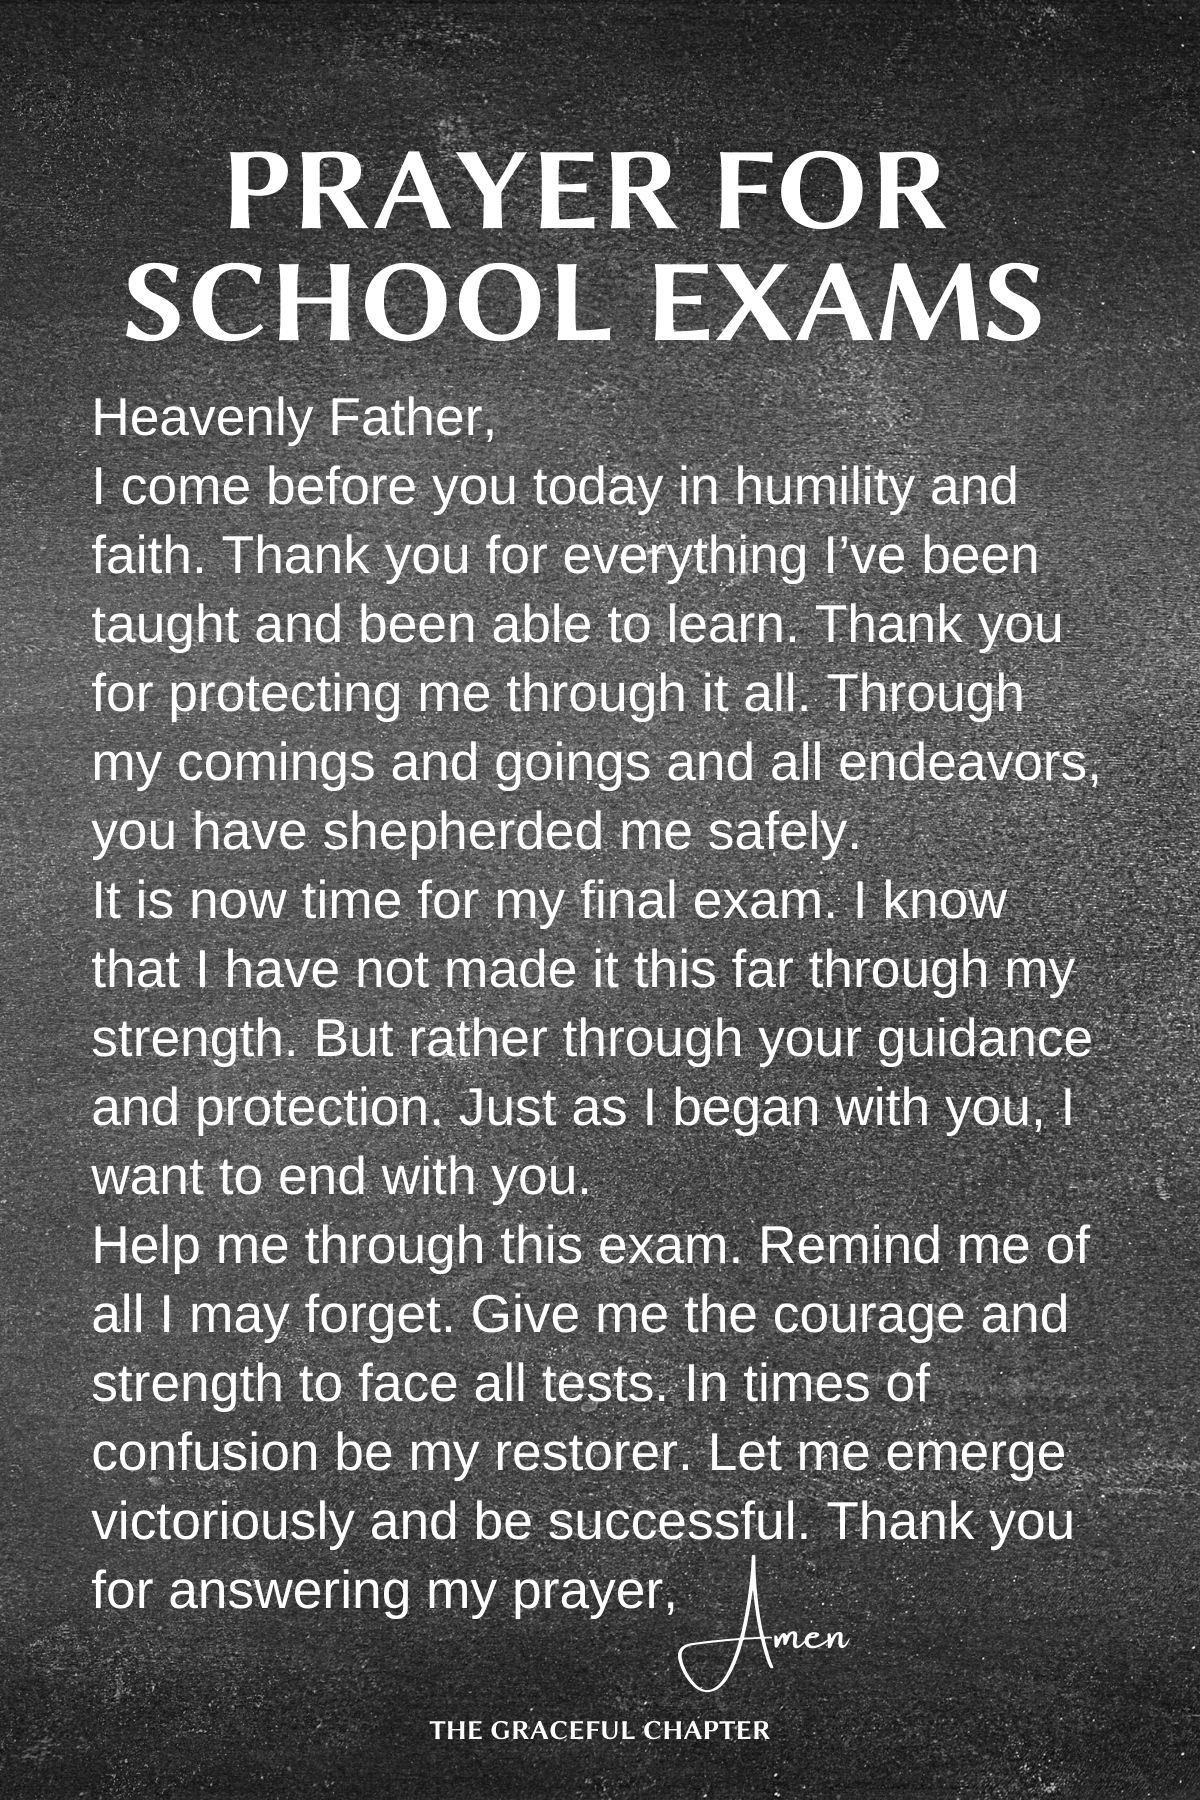 Prayer for exams 